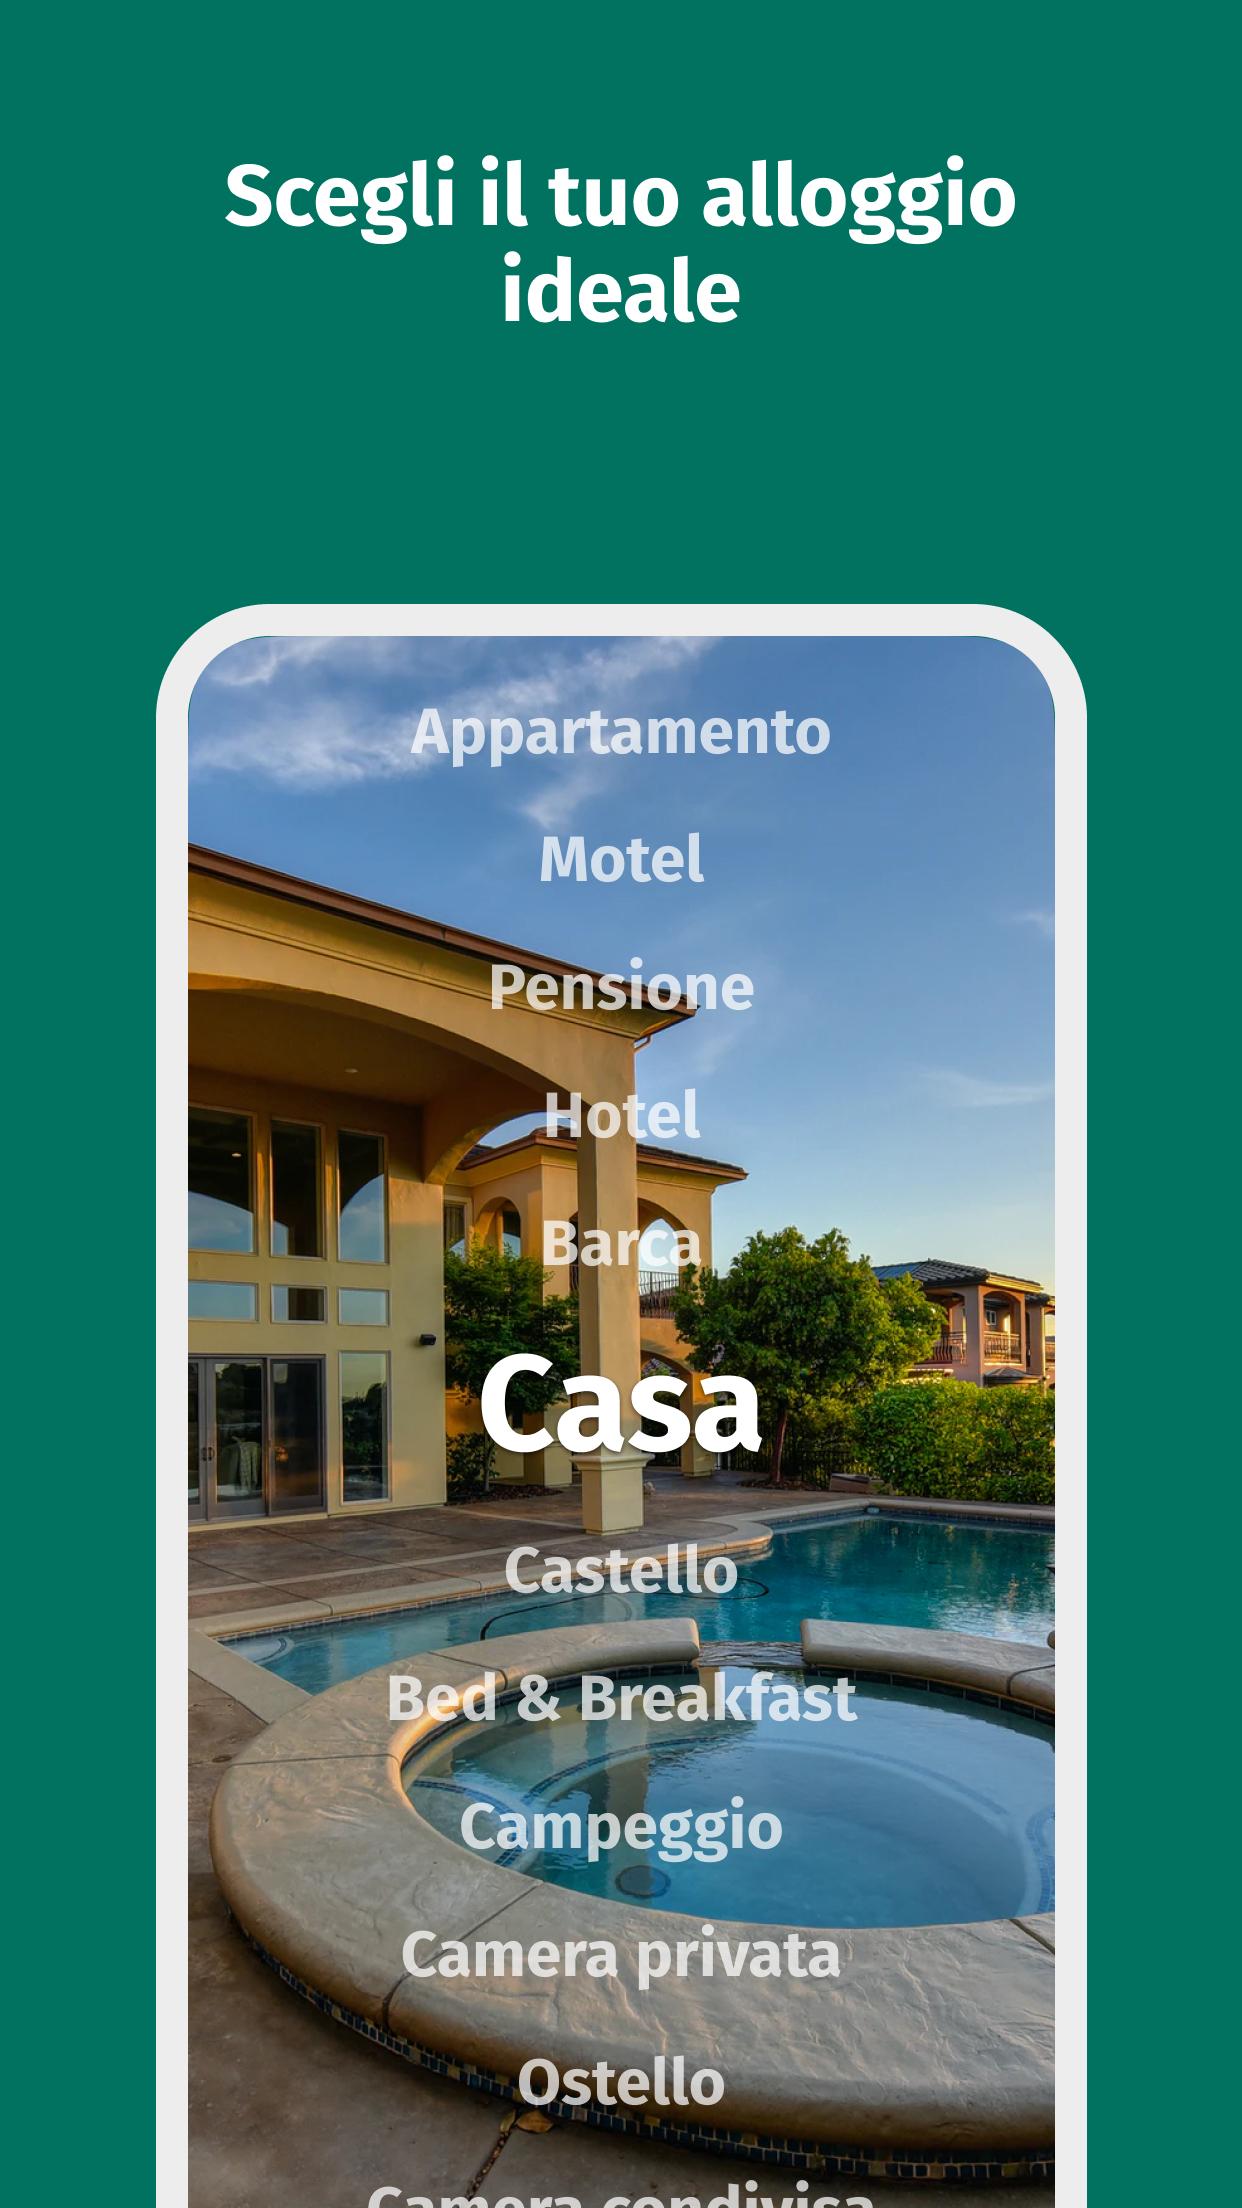 CaseVacanza.it Cerca case vacanza in affitto 1.2.0 Screenshot 4